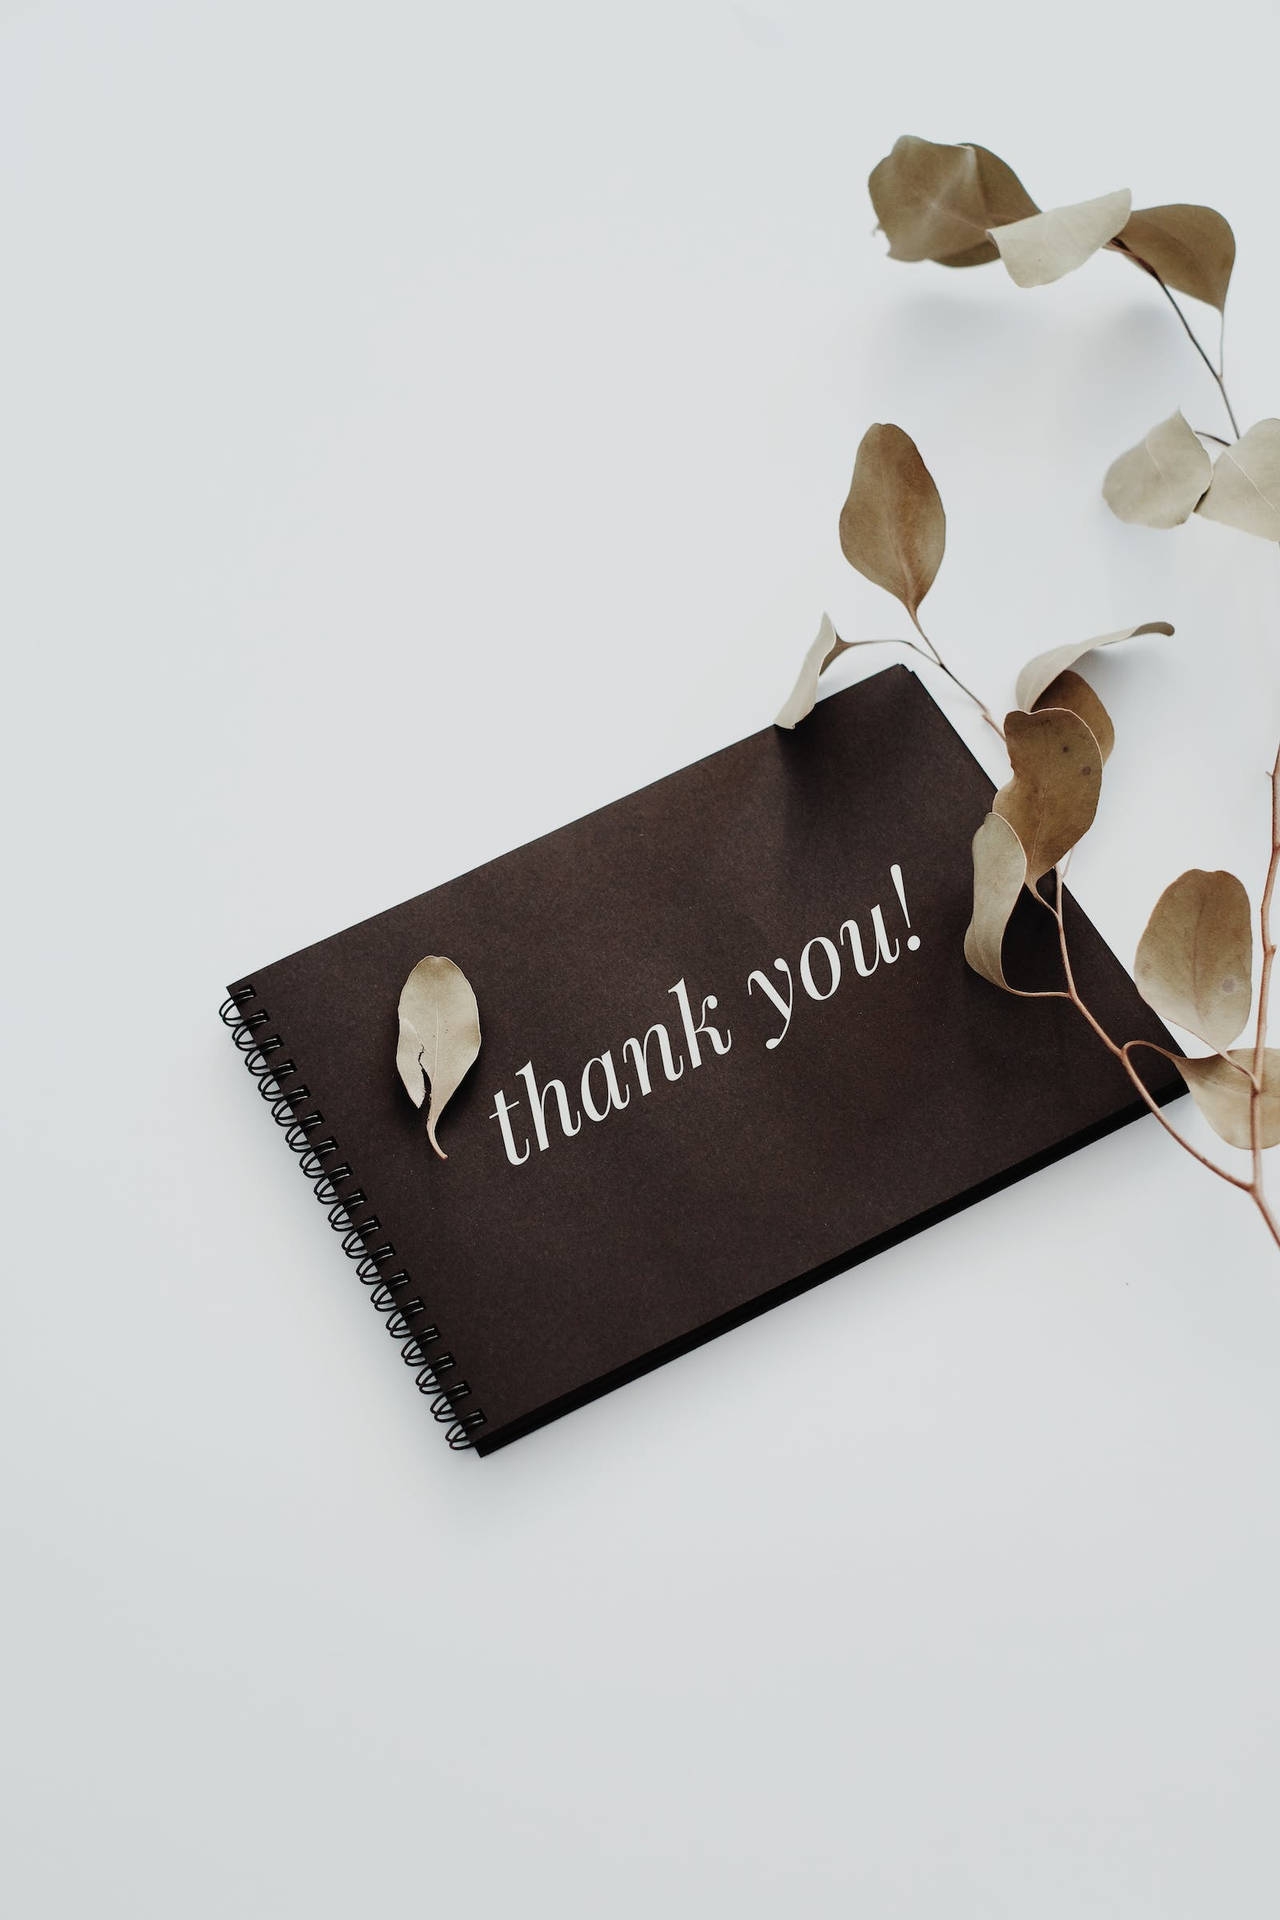 A Gratitude Gesture - An Aesthetic Thank You Notebook